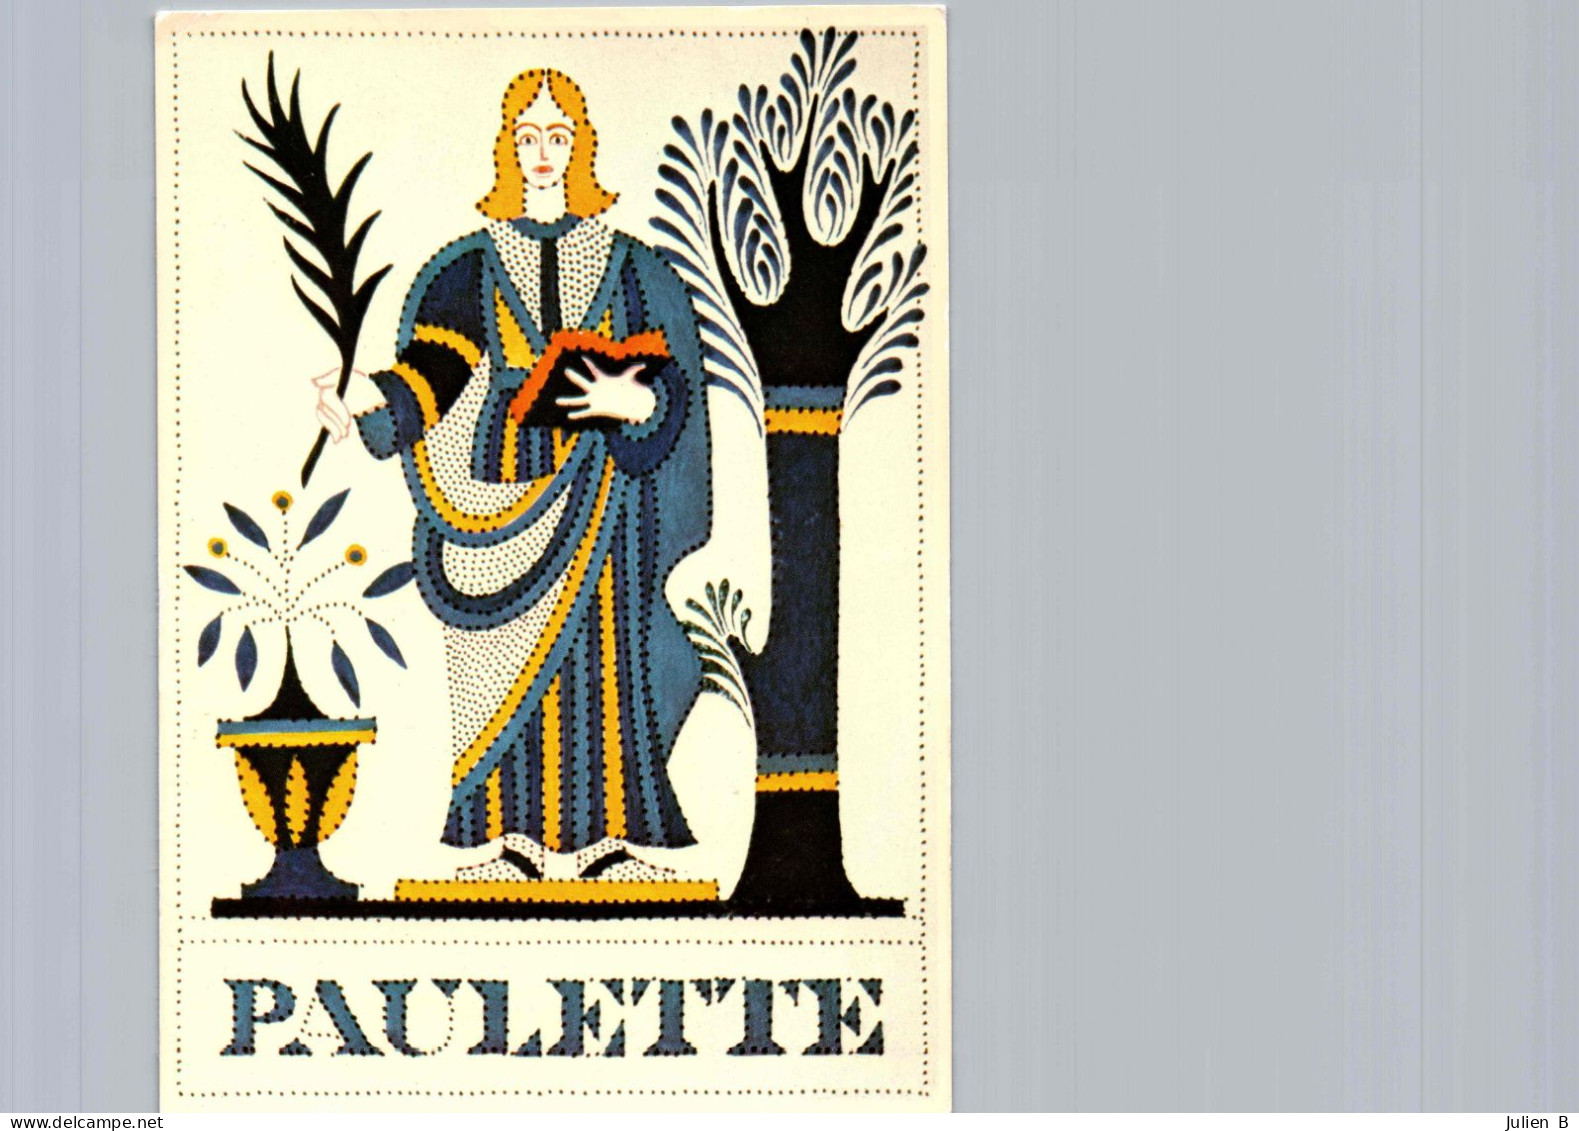 Paulette, Edition Betula - Firstnames